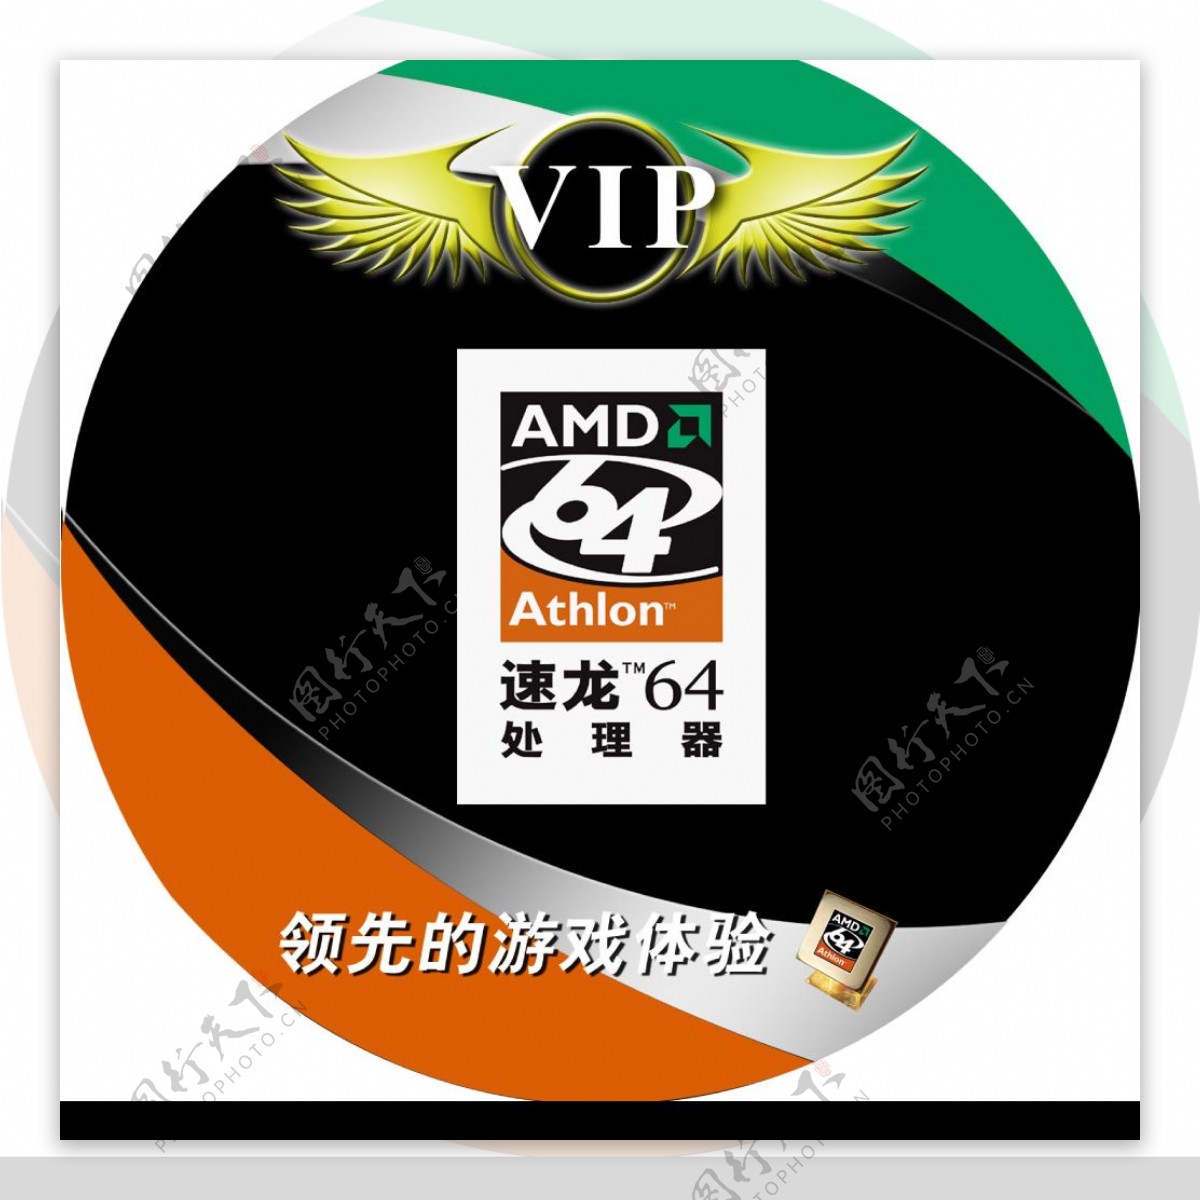 AMD网吧VIP包厢号牌图片